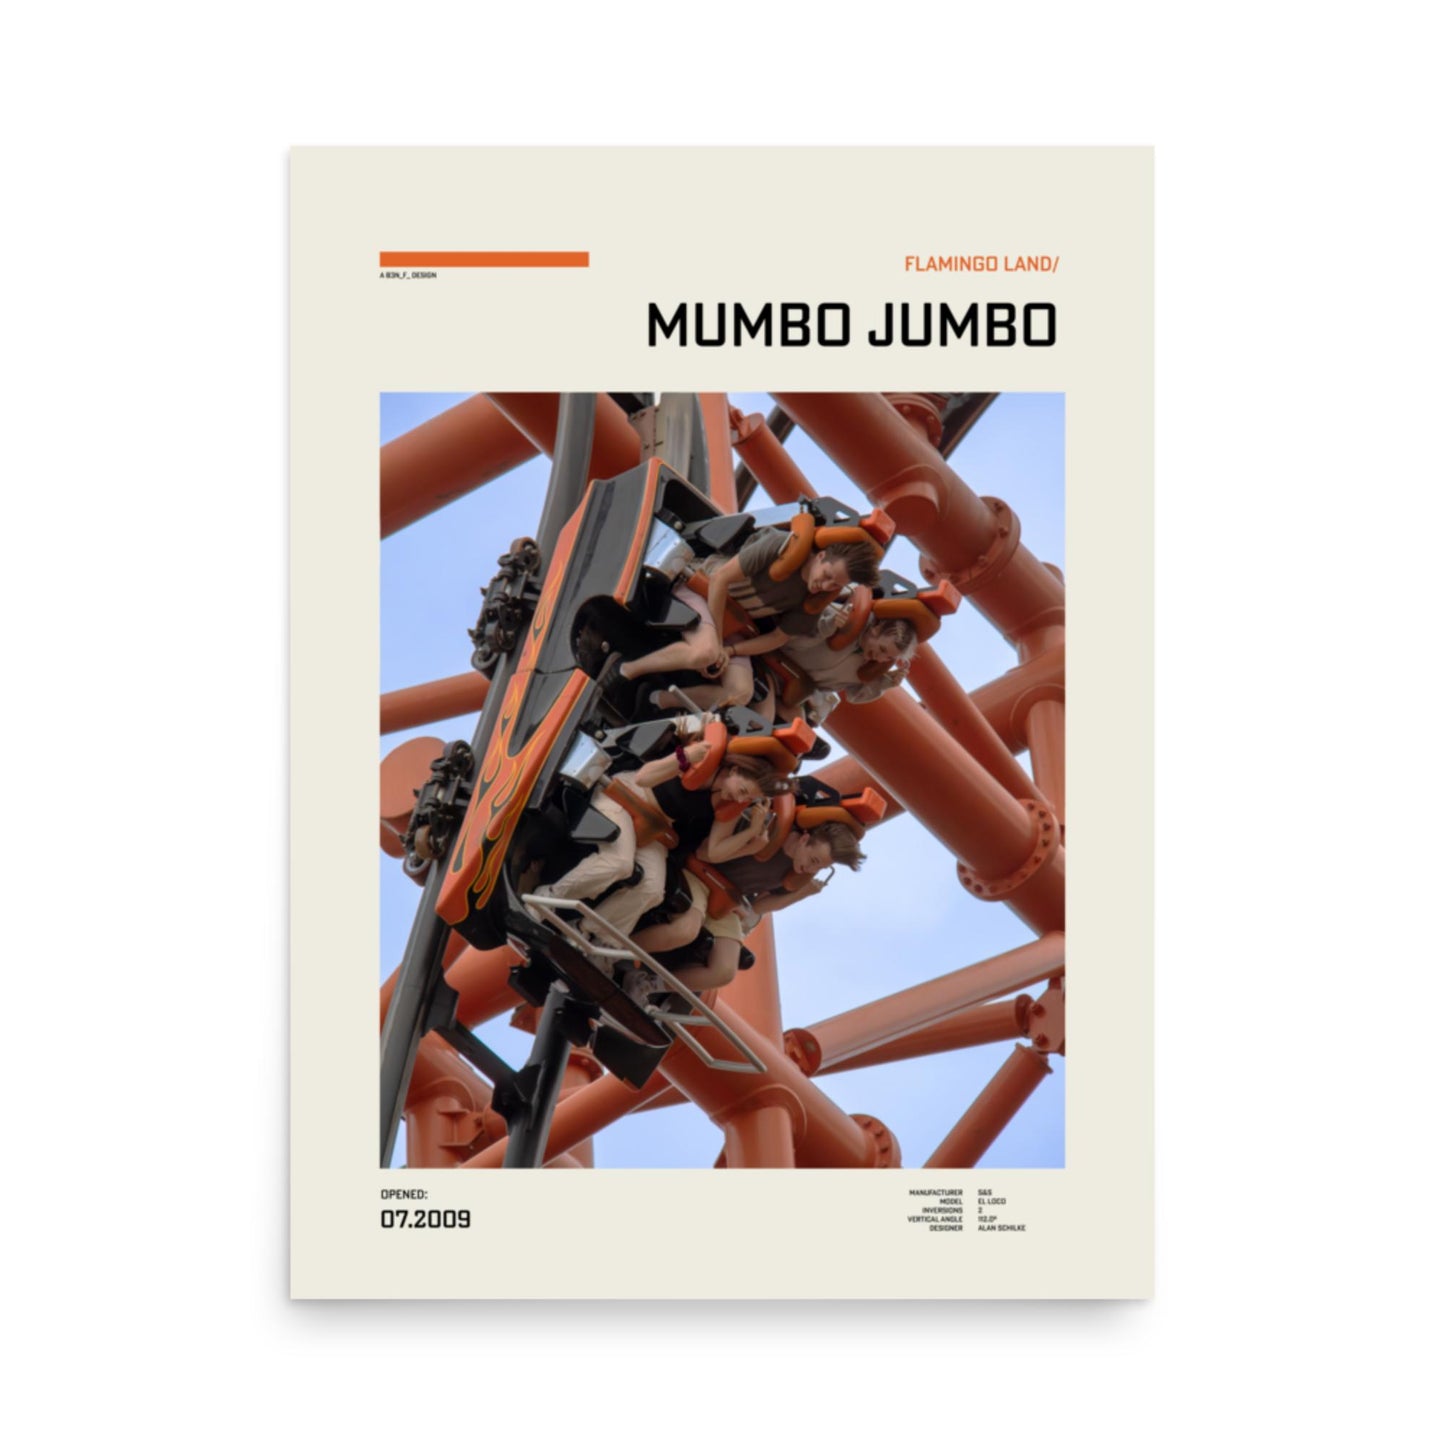 The Ex-World Record Drop: Mumbo Jumbo